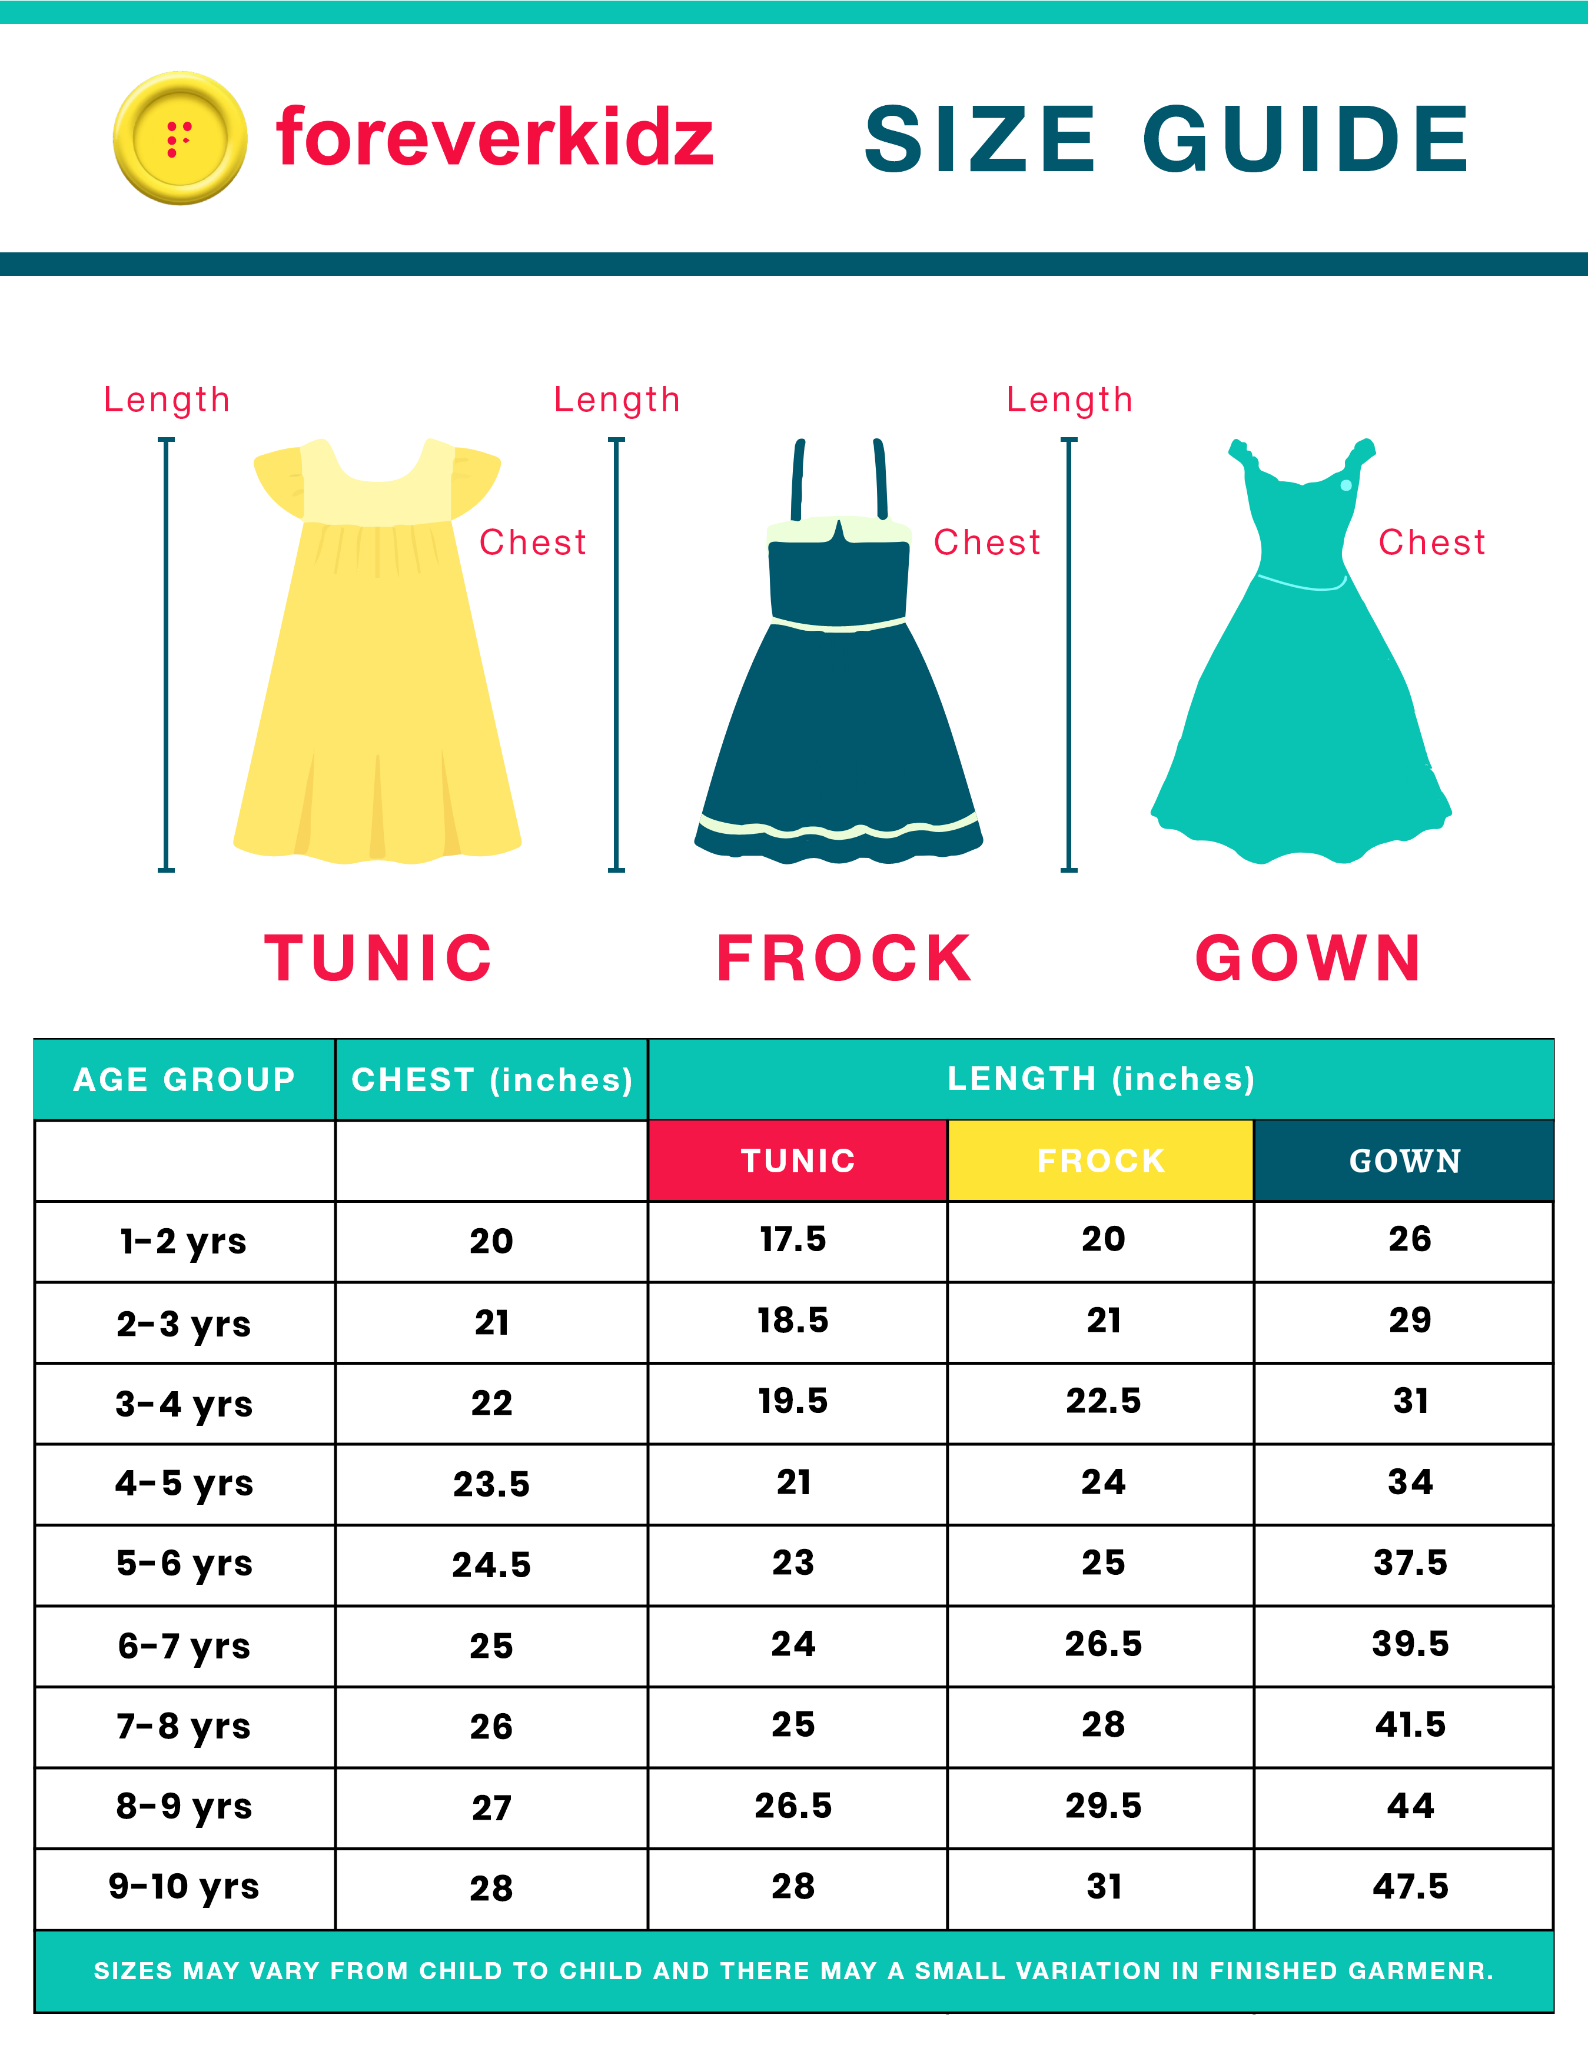 Size Guide for choosing dress